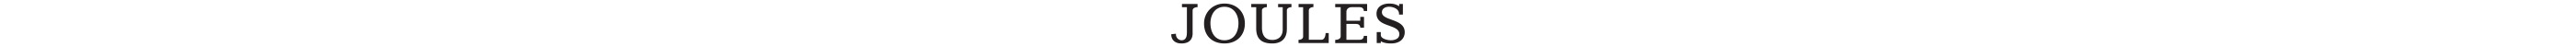 Joules-logo_DT